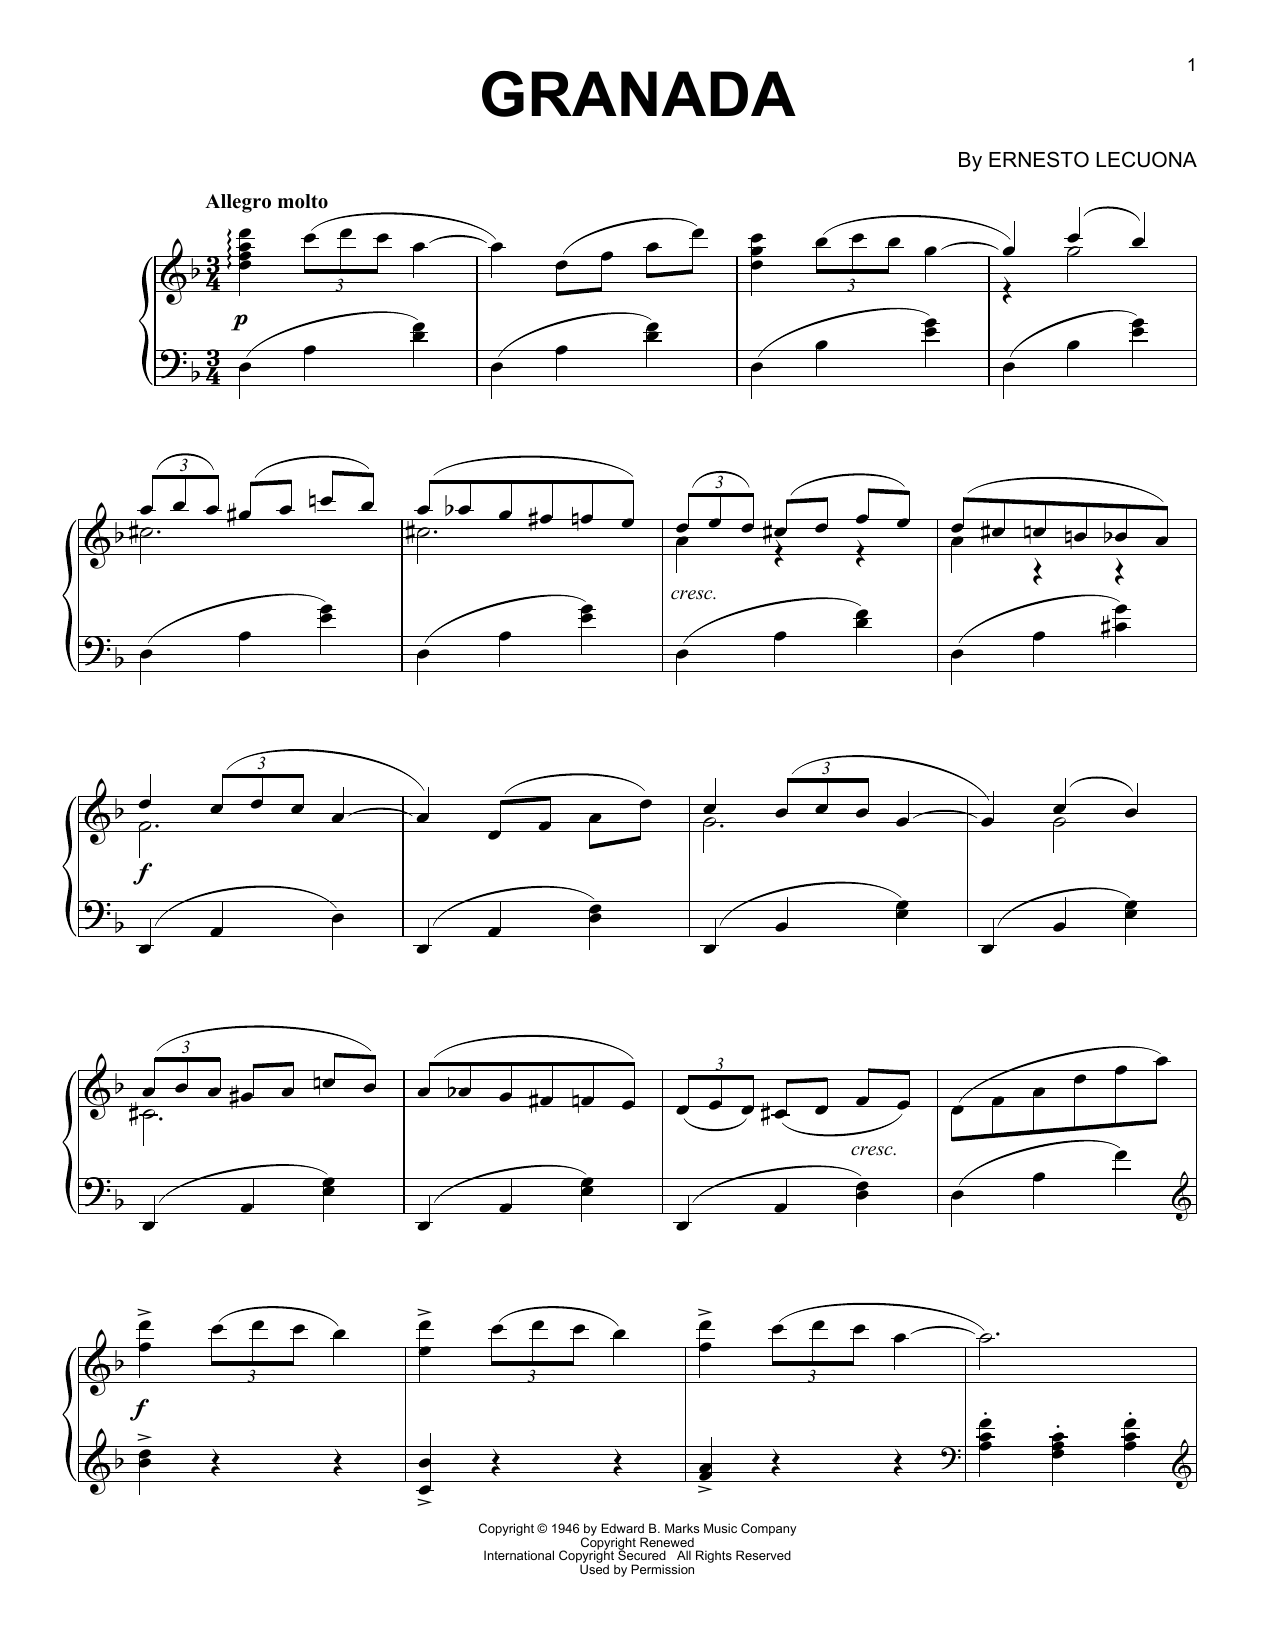 Ernesto Lecuona Granada Sheet Music Notes & Chords for Piano - Download or Print PDF